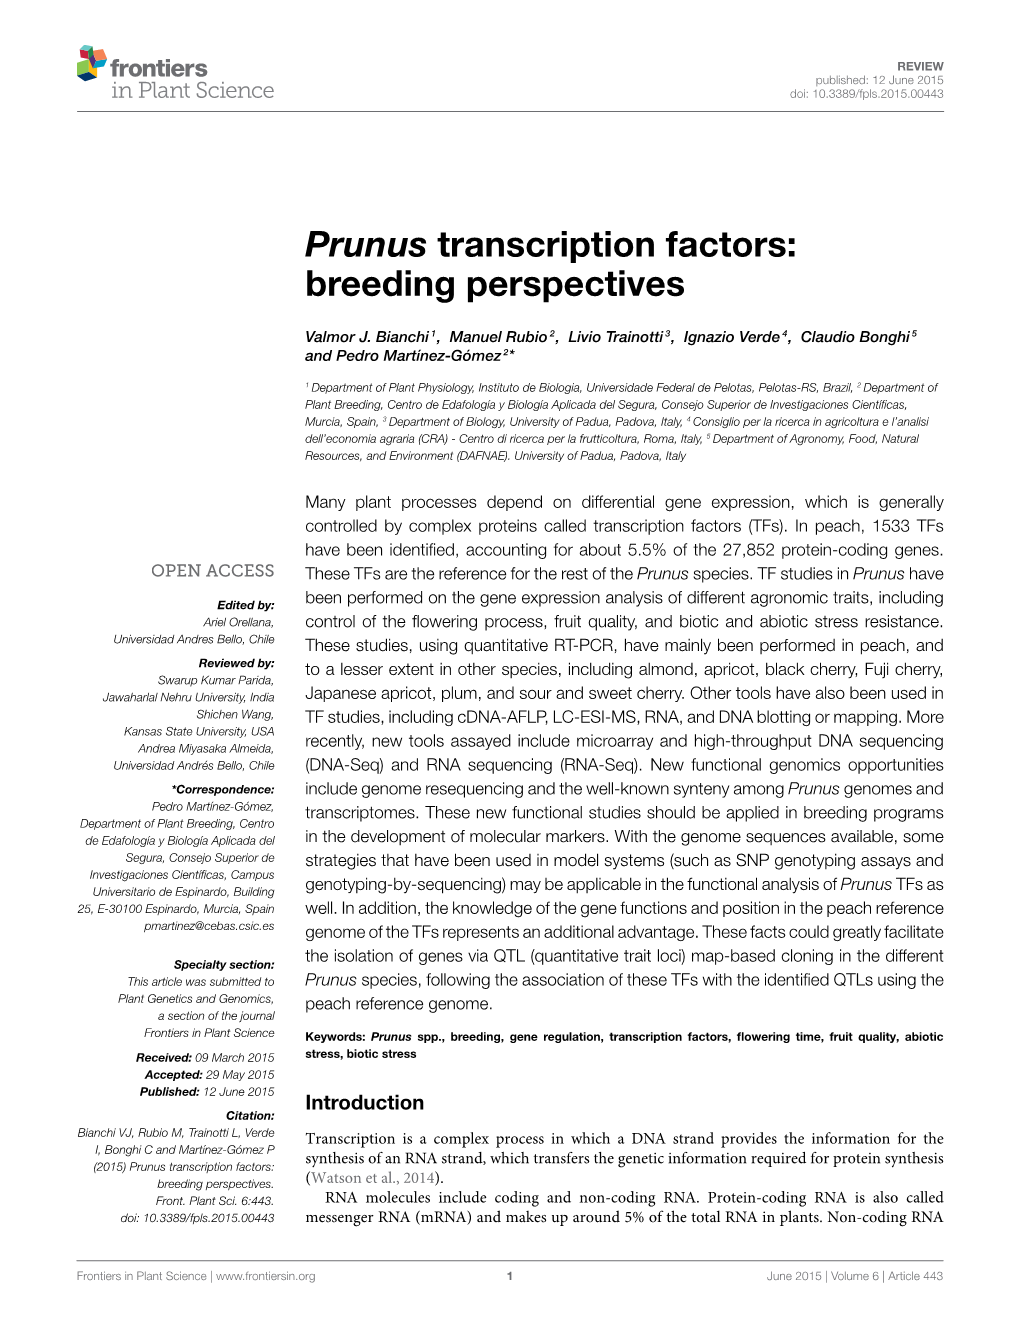 Prunus Transcription Factors: Breeding Perspectives